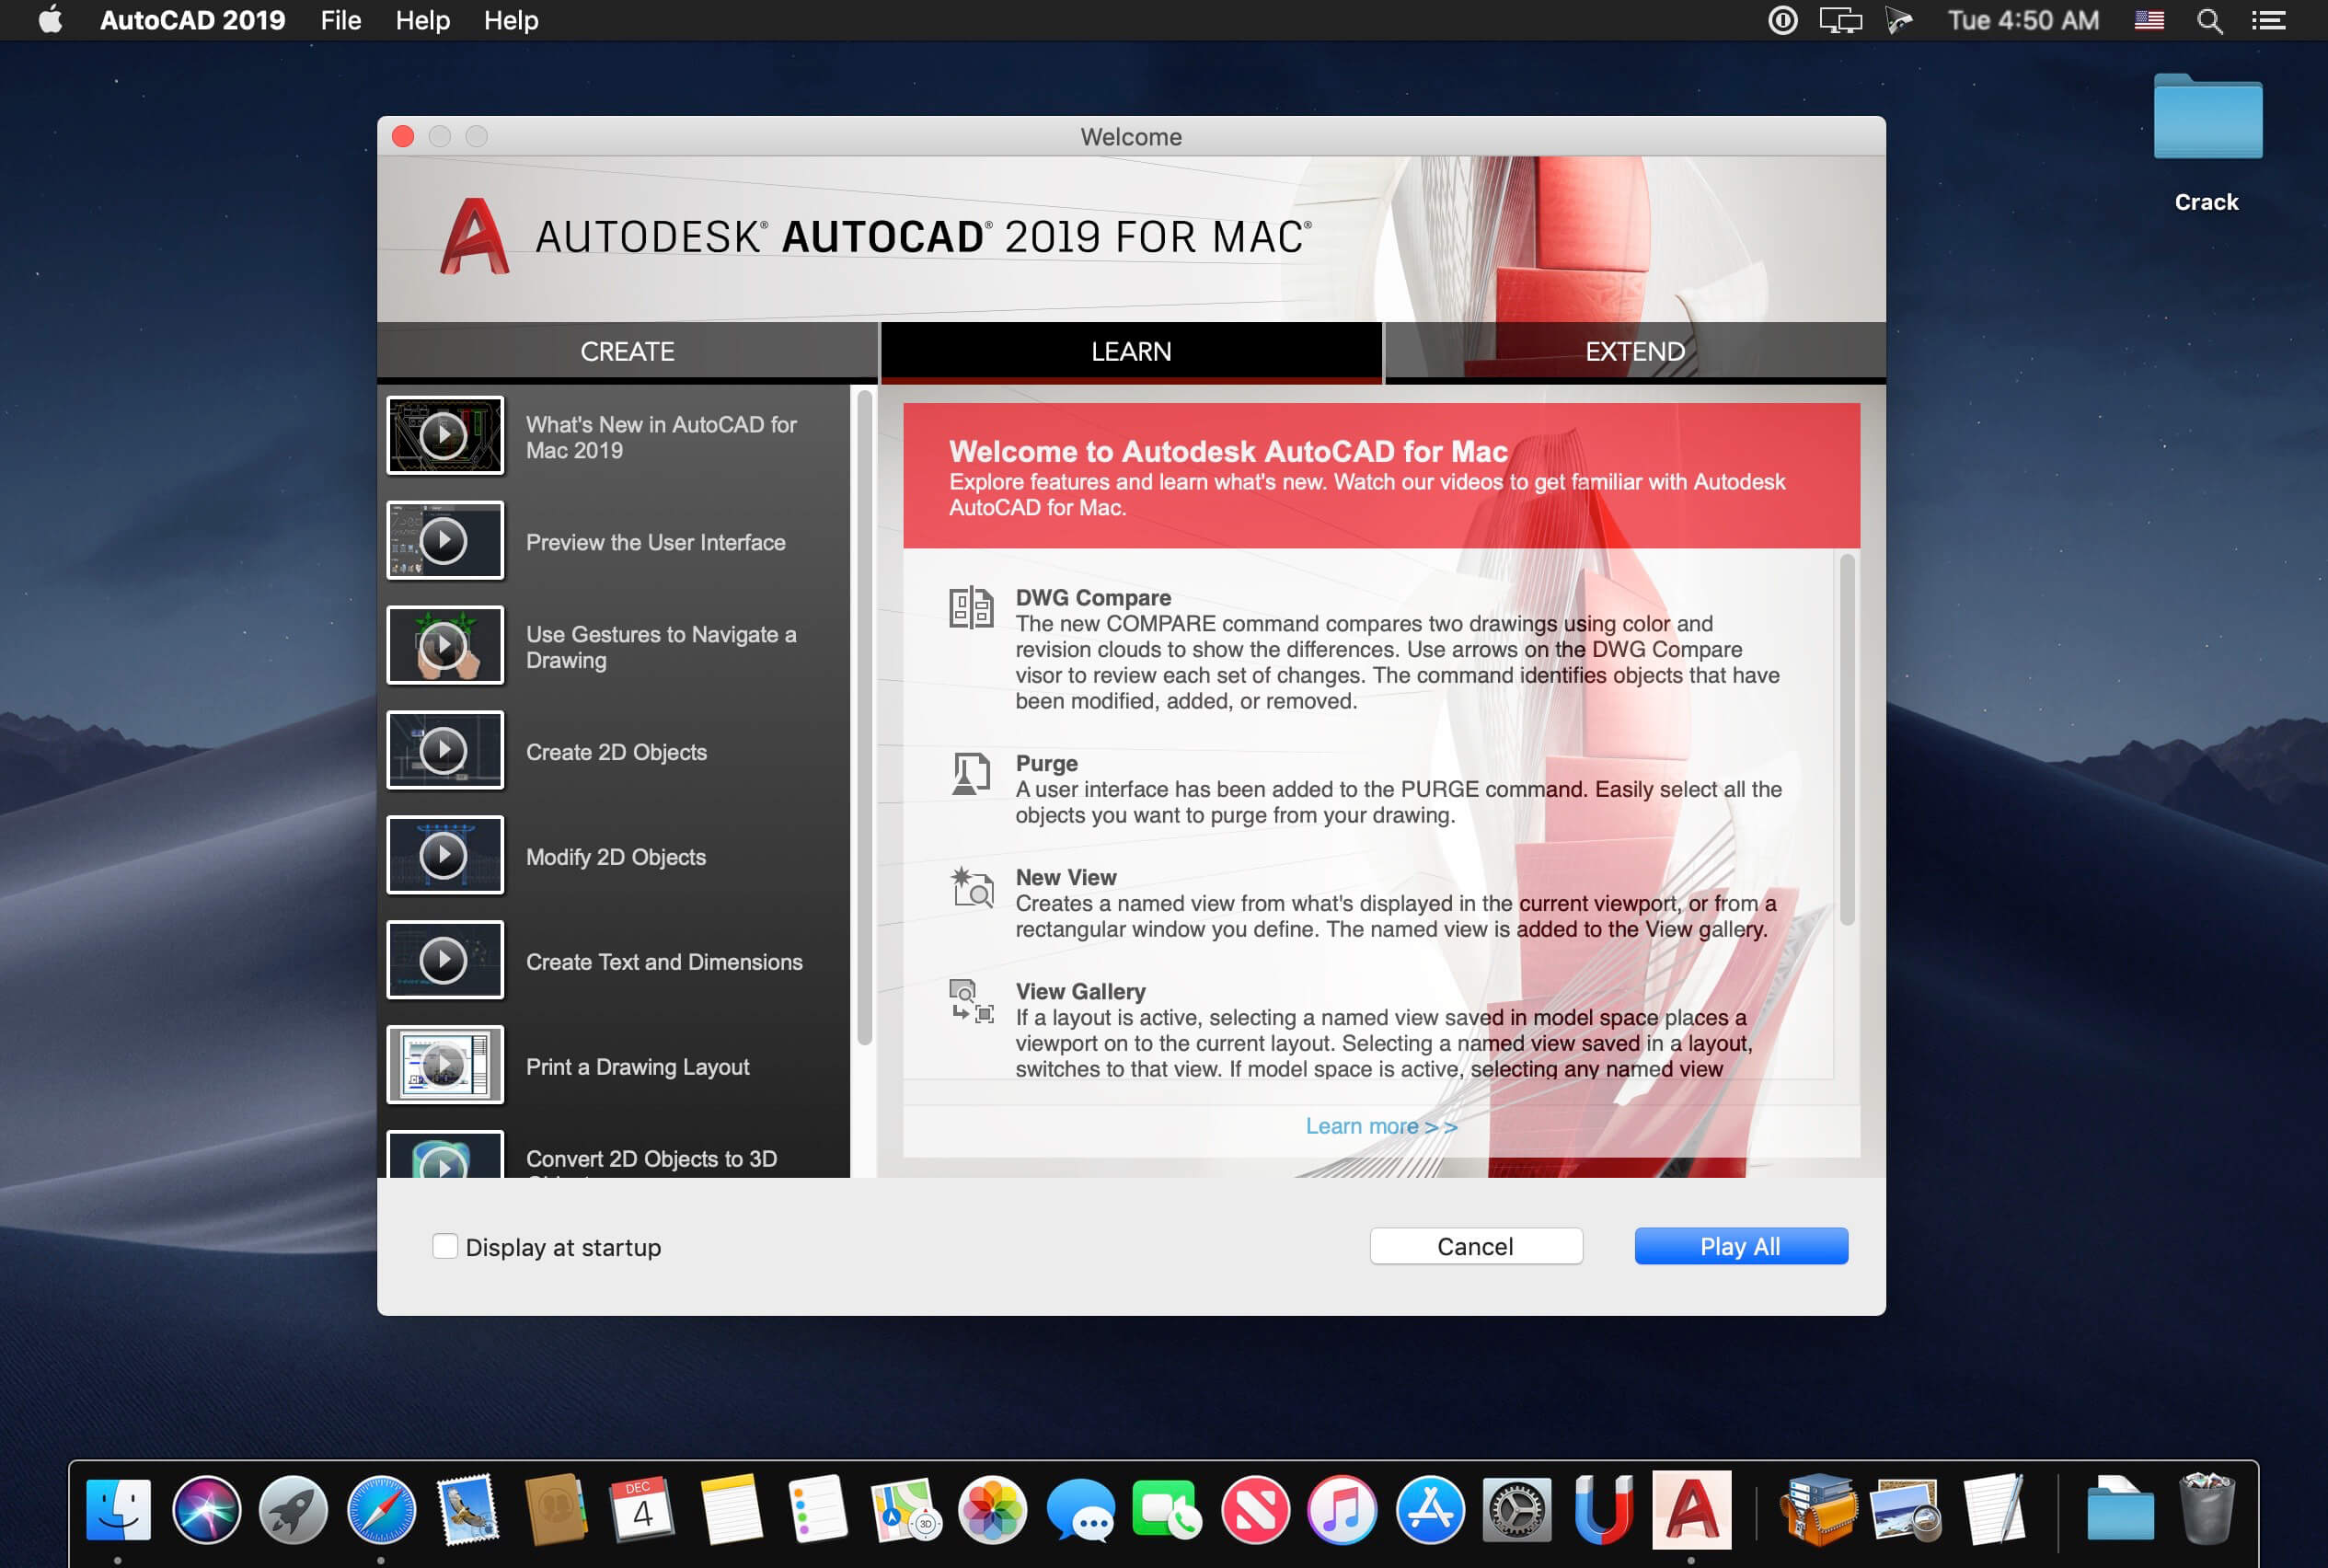 autodesk for mac 3d design